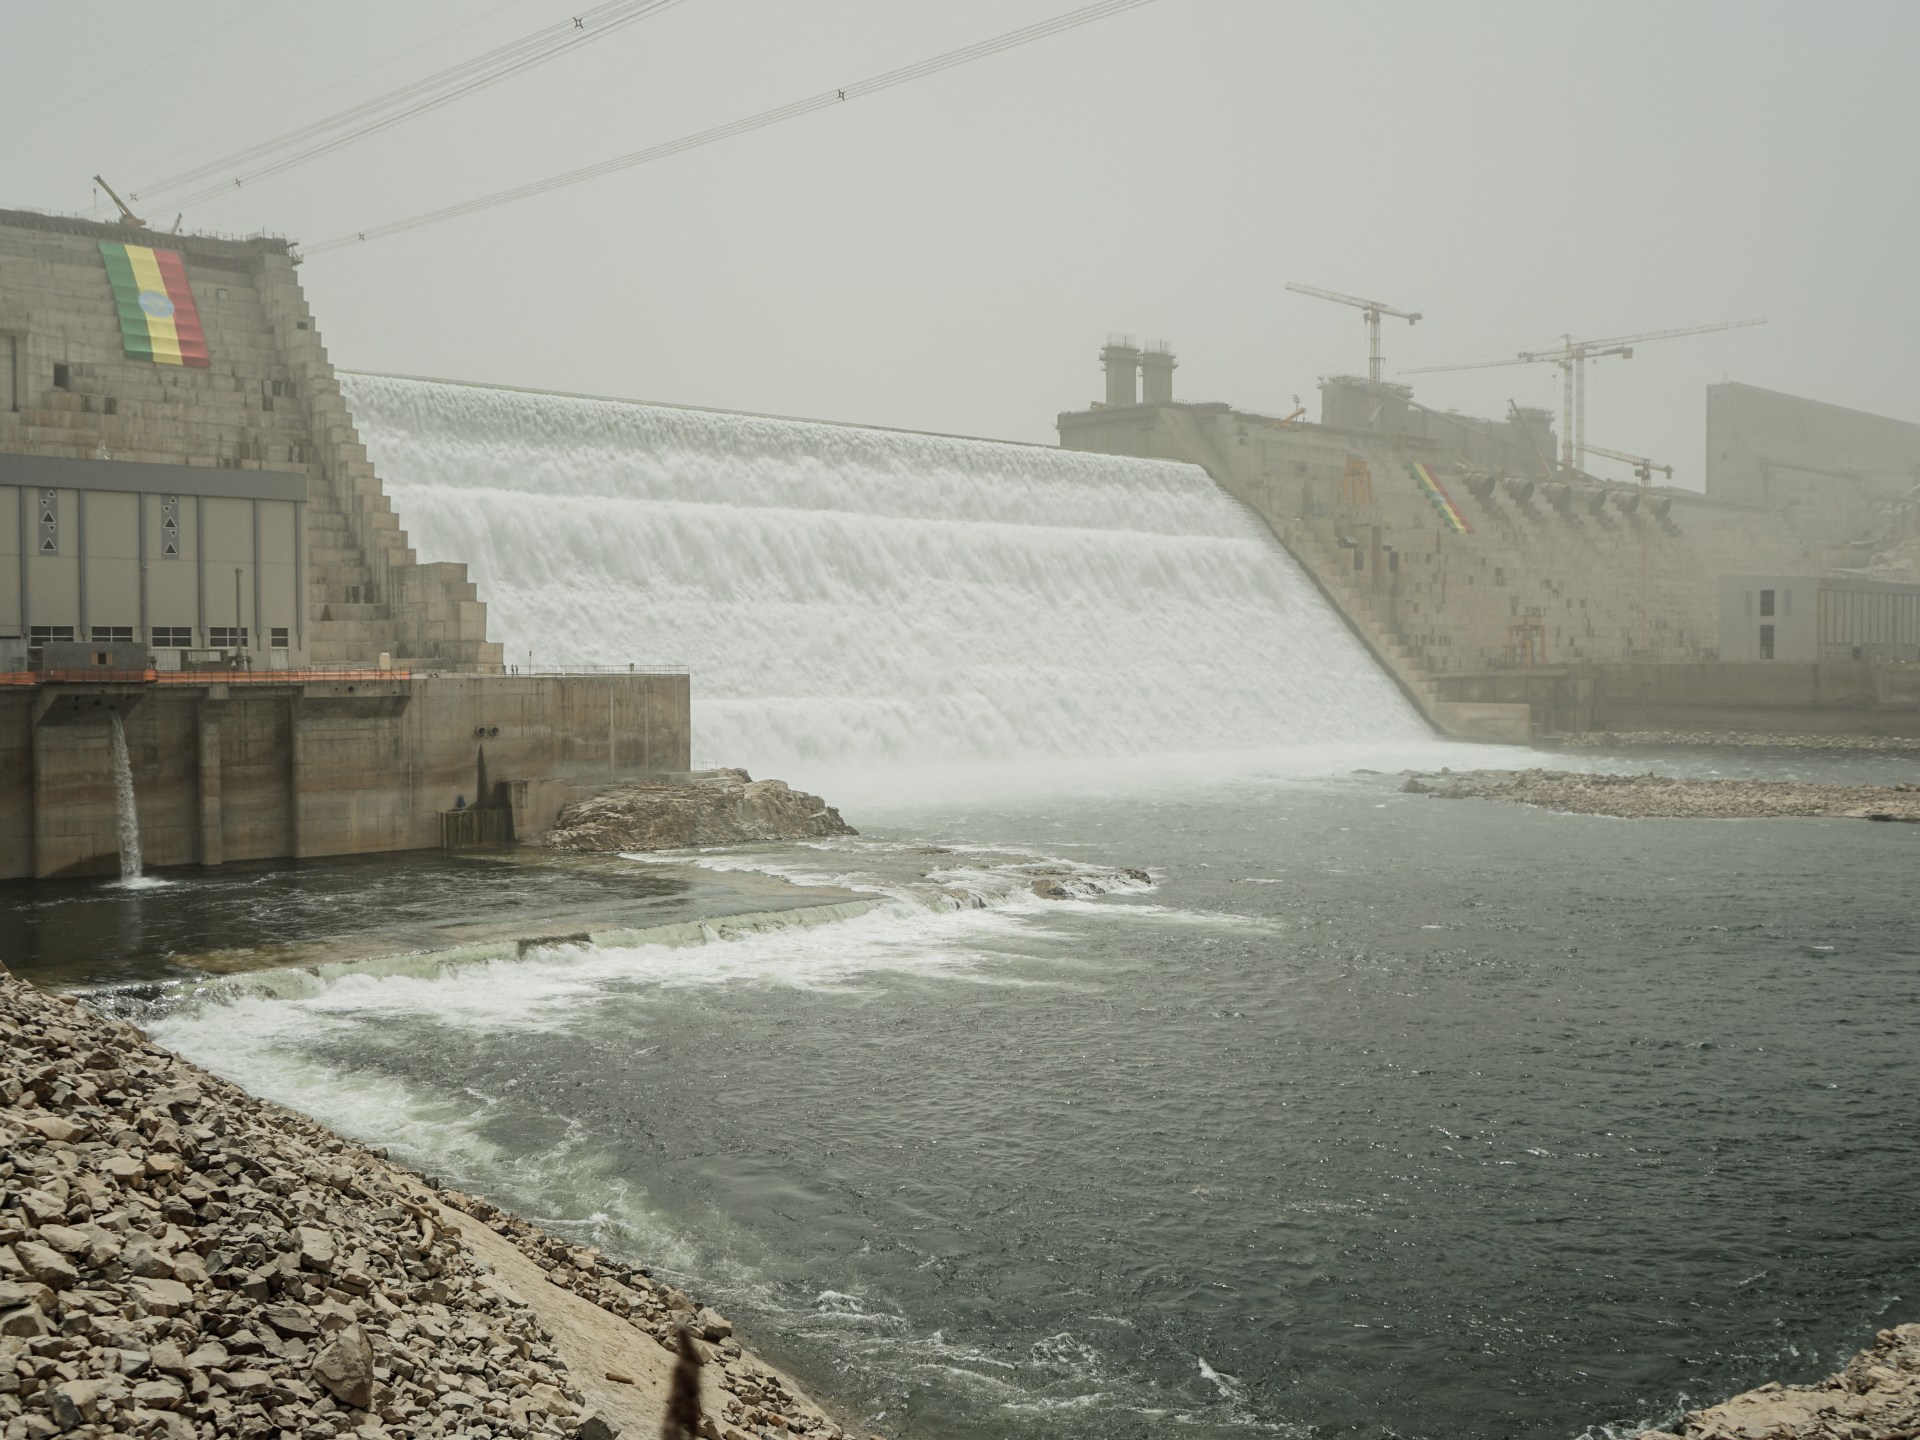 grand ethiopian renaissance dam